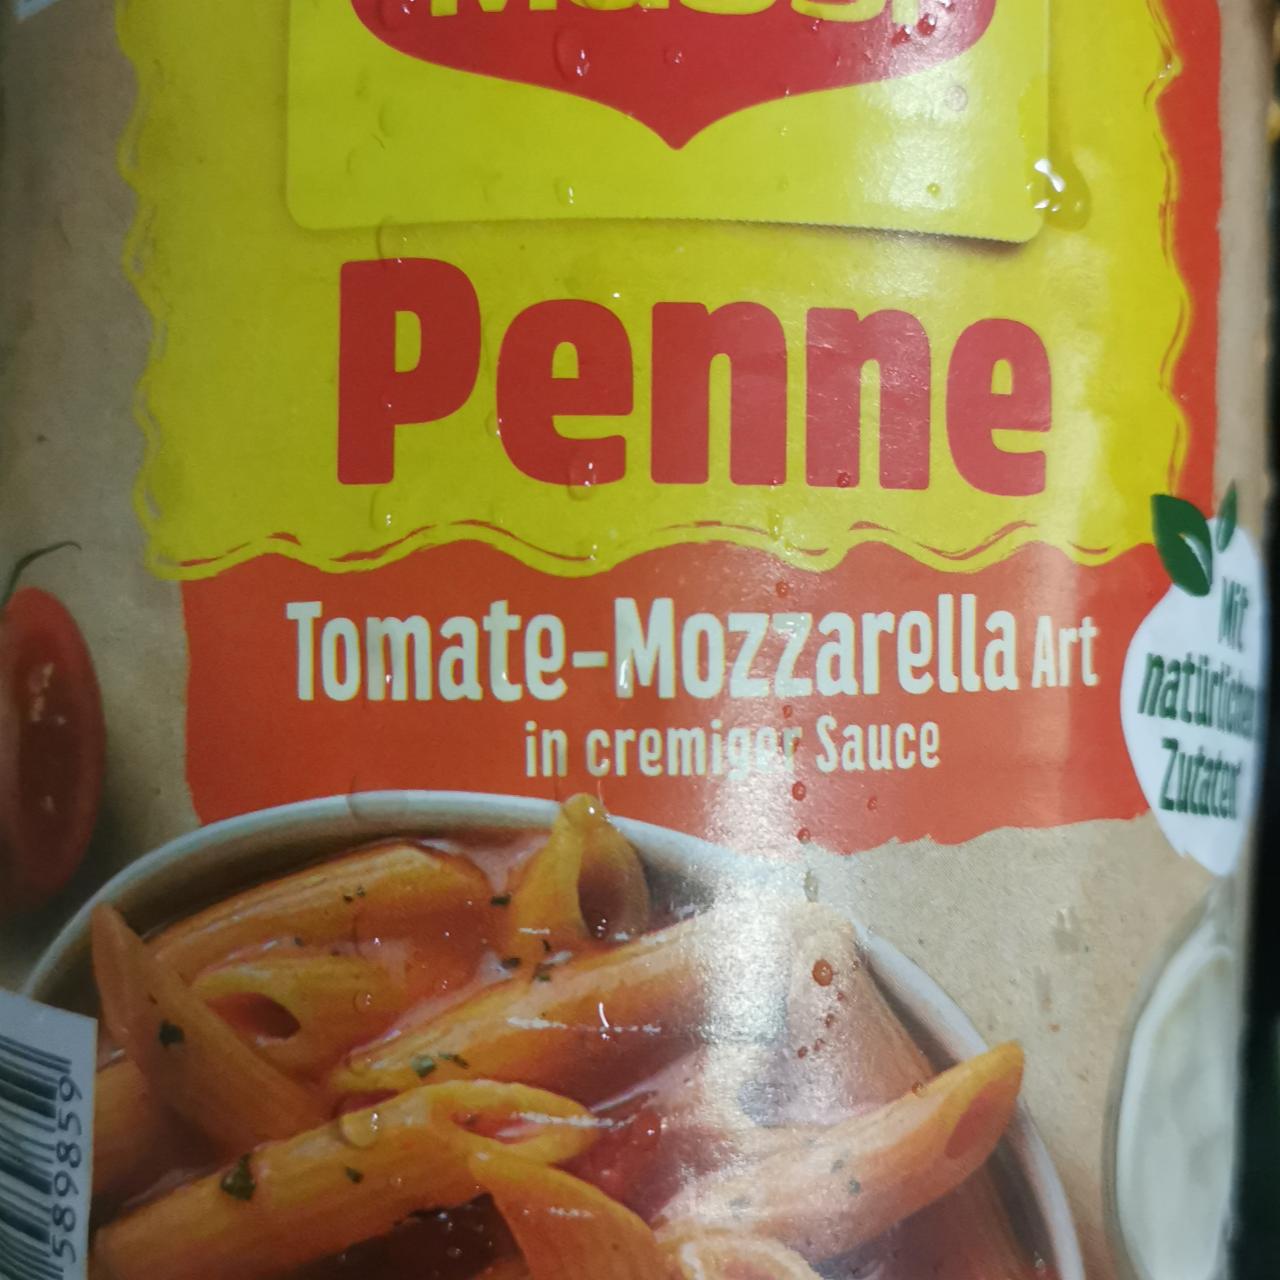 Fotografie - Penne Tomate - Mozzarella art in cremiger Sauce Maggi